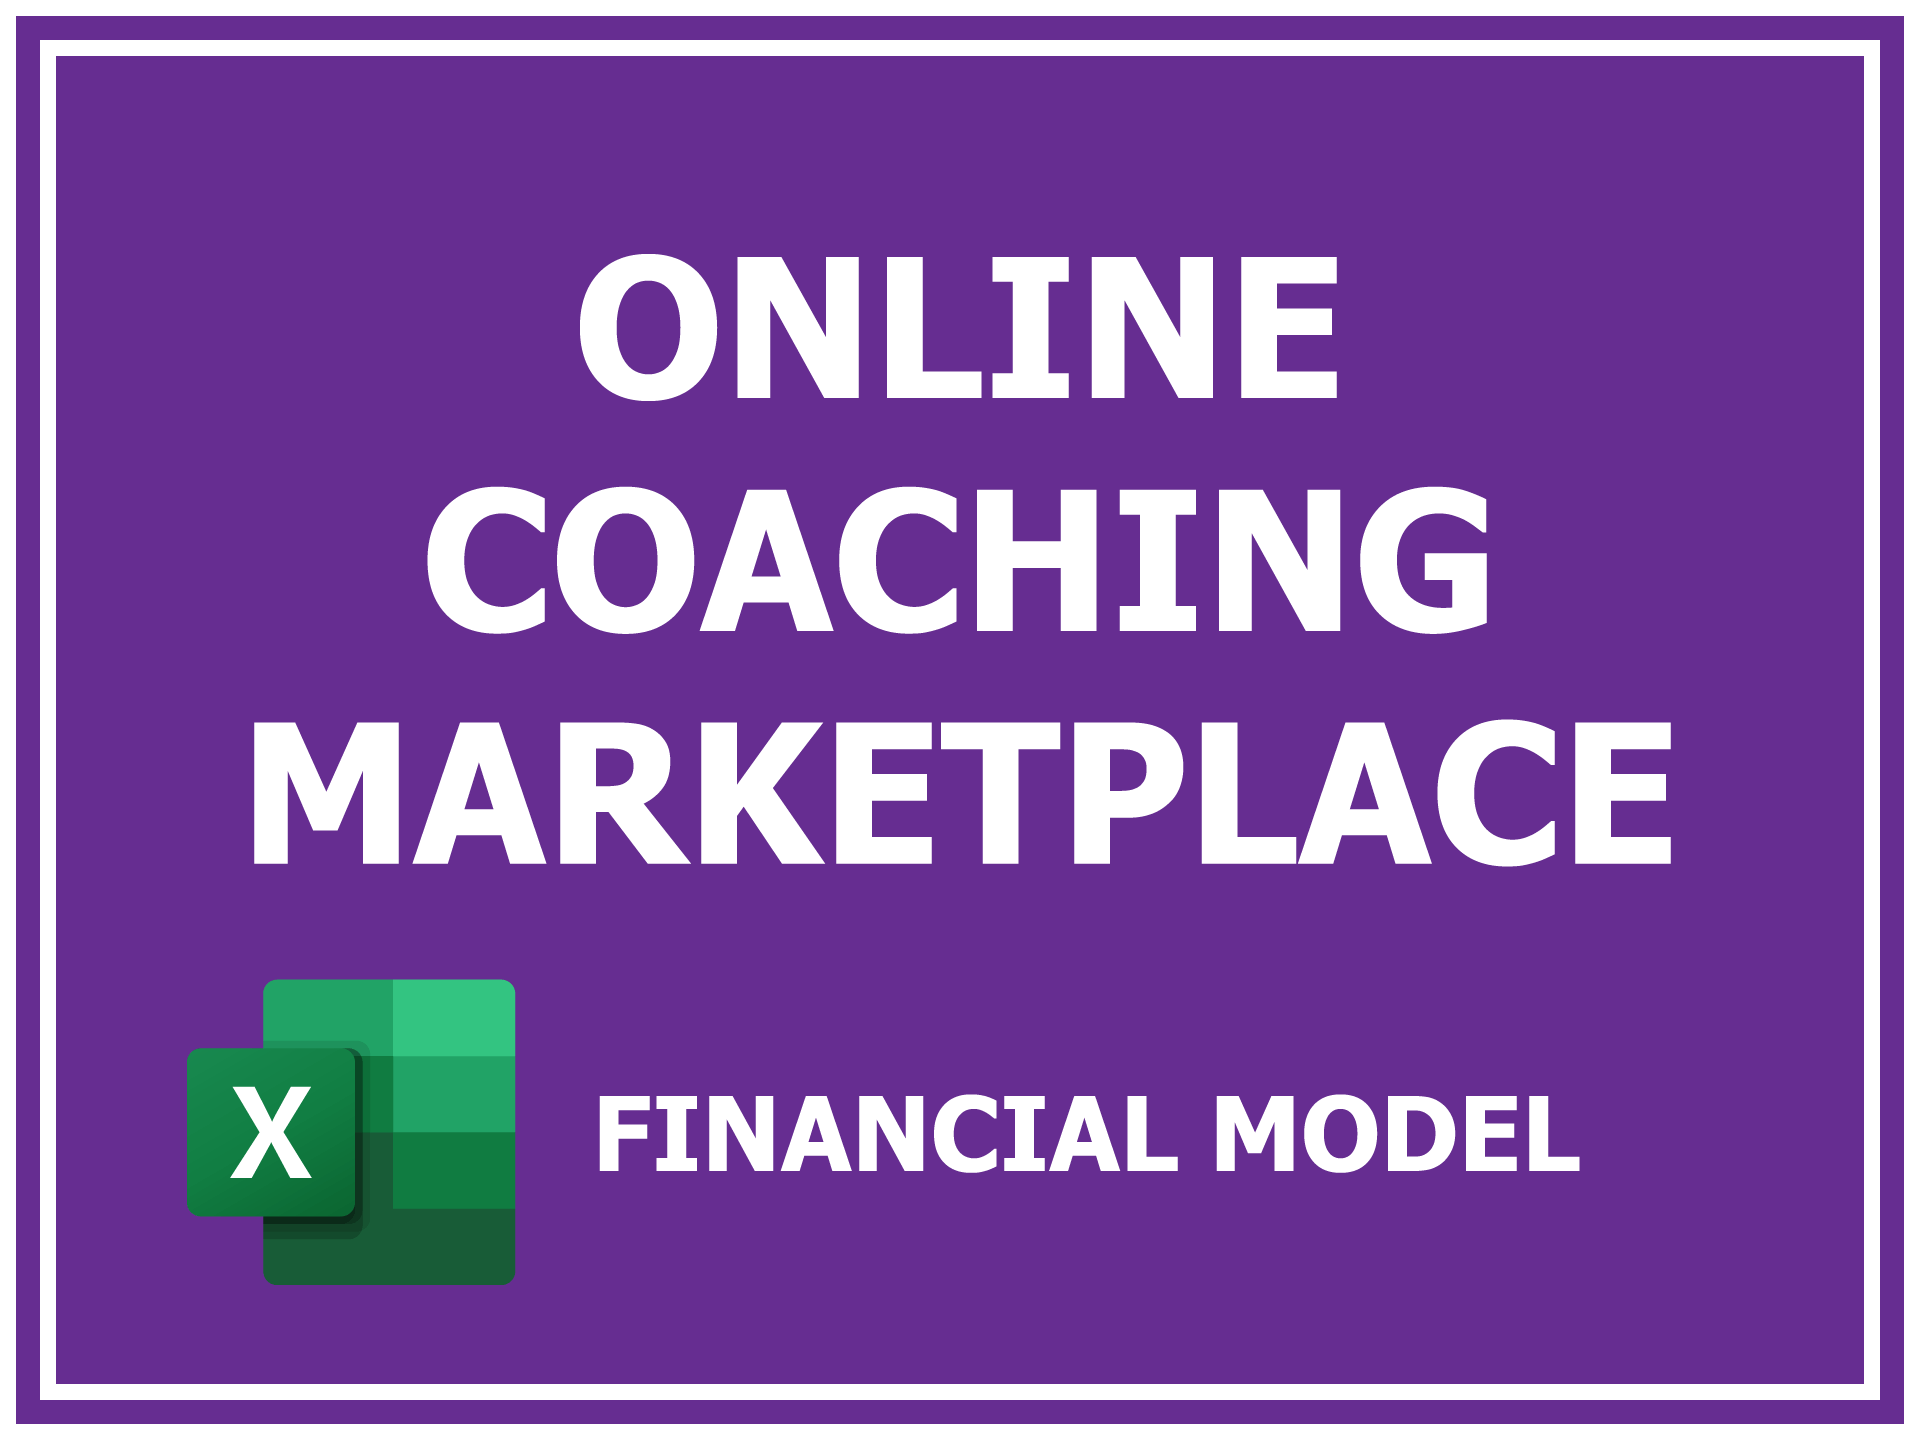 Online Coaching Marketplace